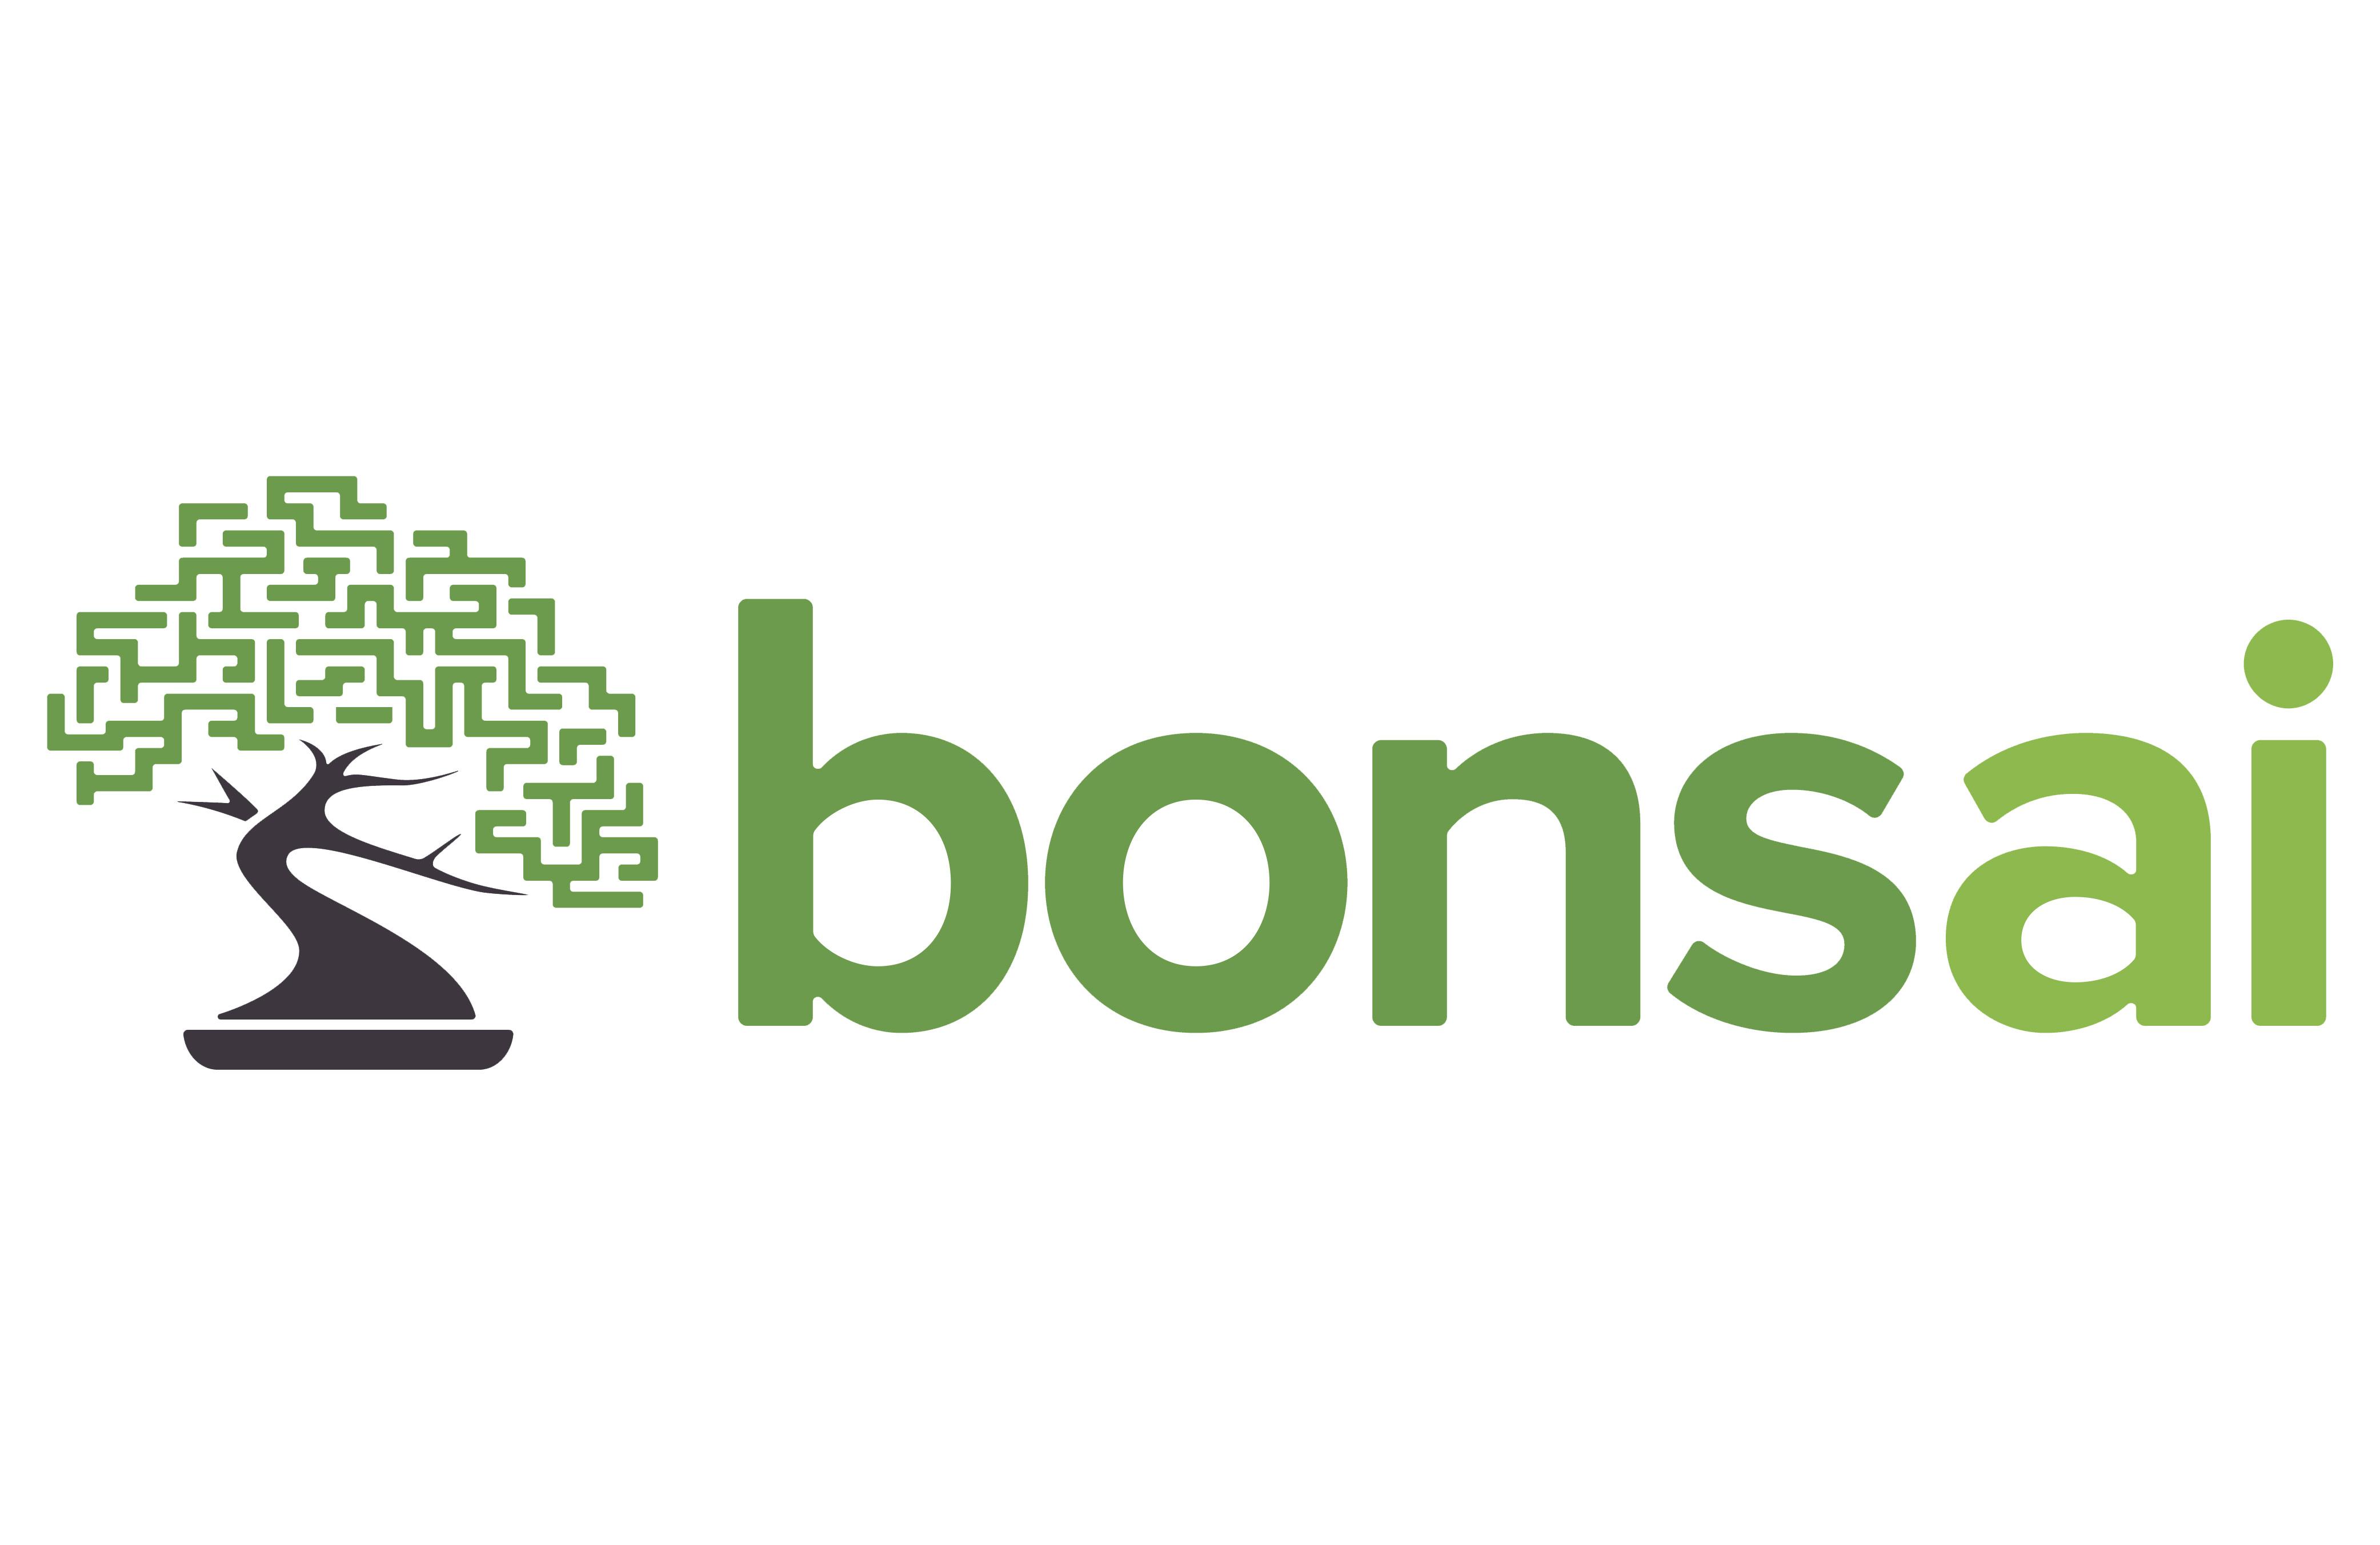 Bonsai Logo - Bonsai claims AI concept networking technique helps robot work 45X